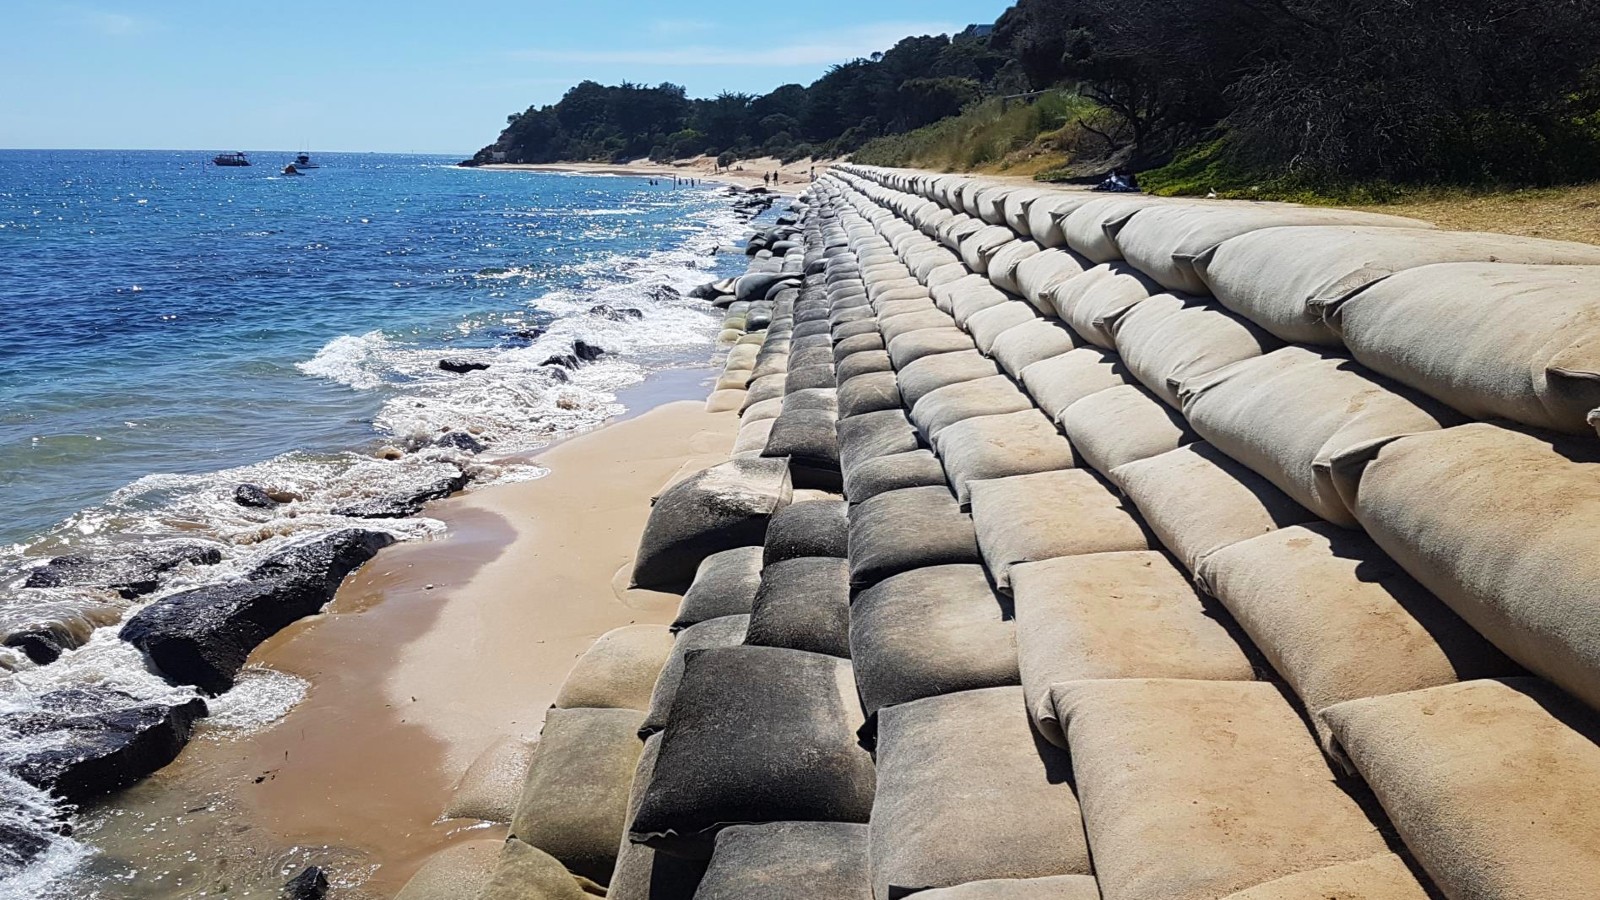 Image Long rows of sandbags along the shoreline form steps..